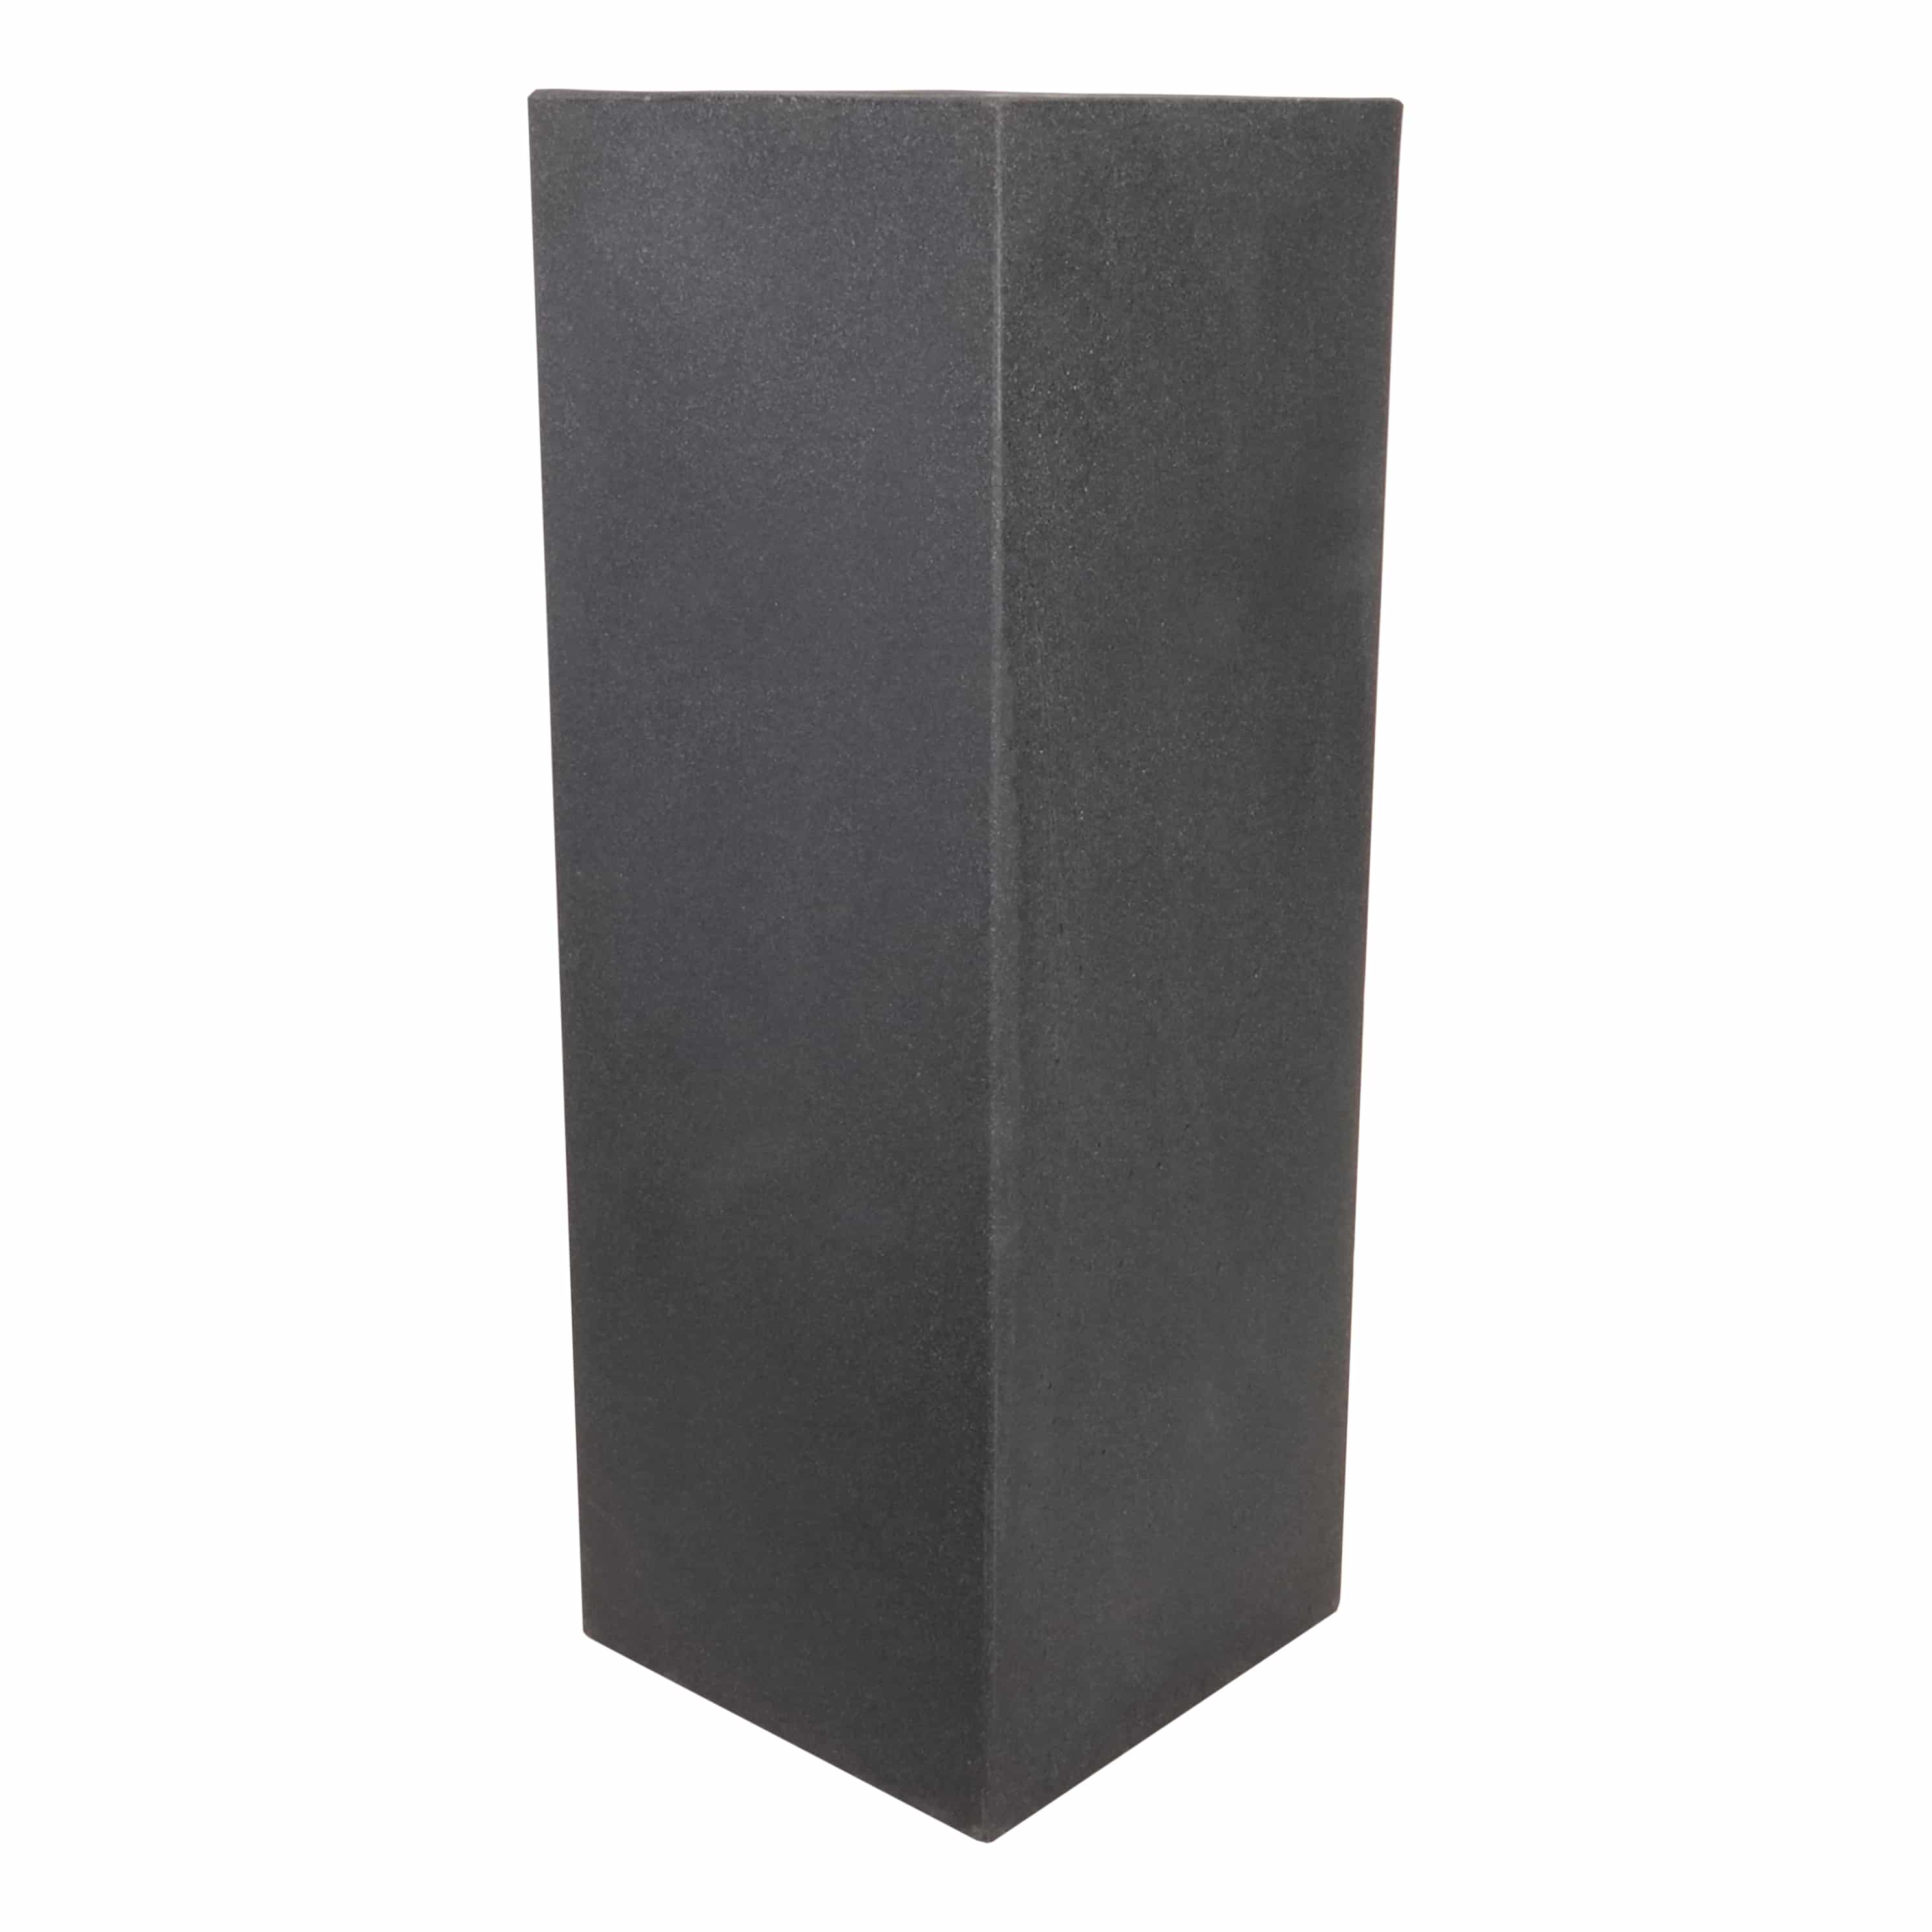 4gardenz® Stone Pilaar Plantenbak 30x30x80 cm - Steengrijs